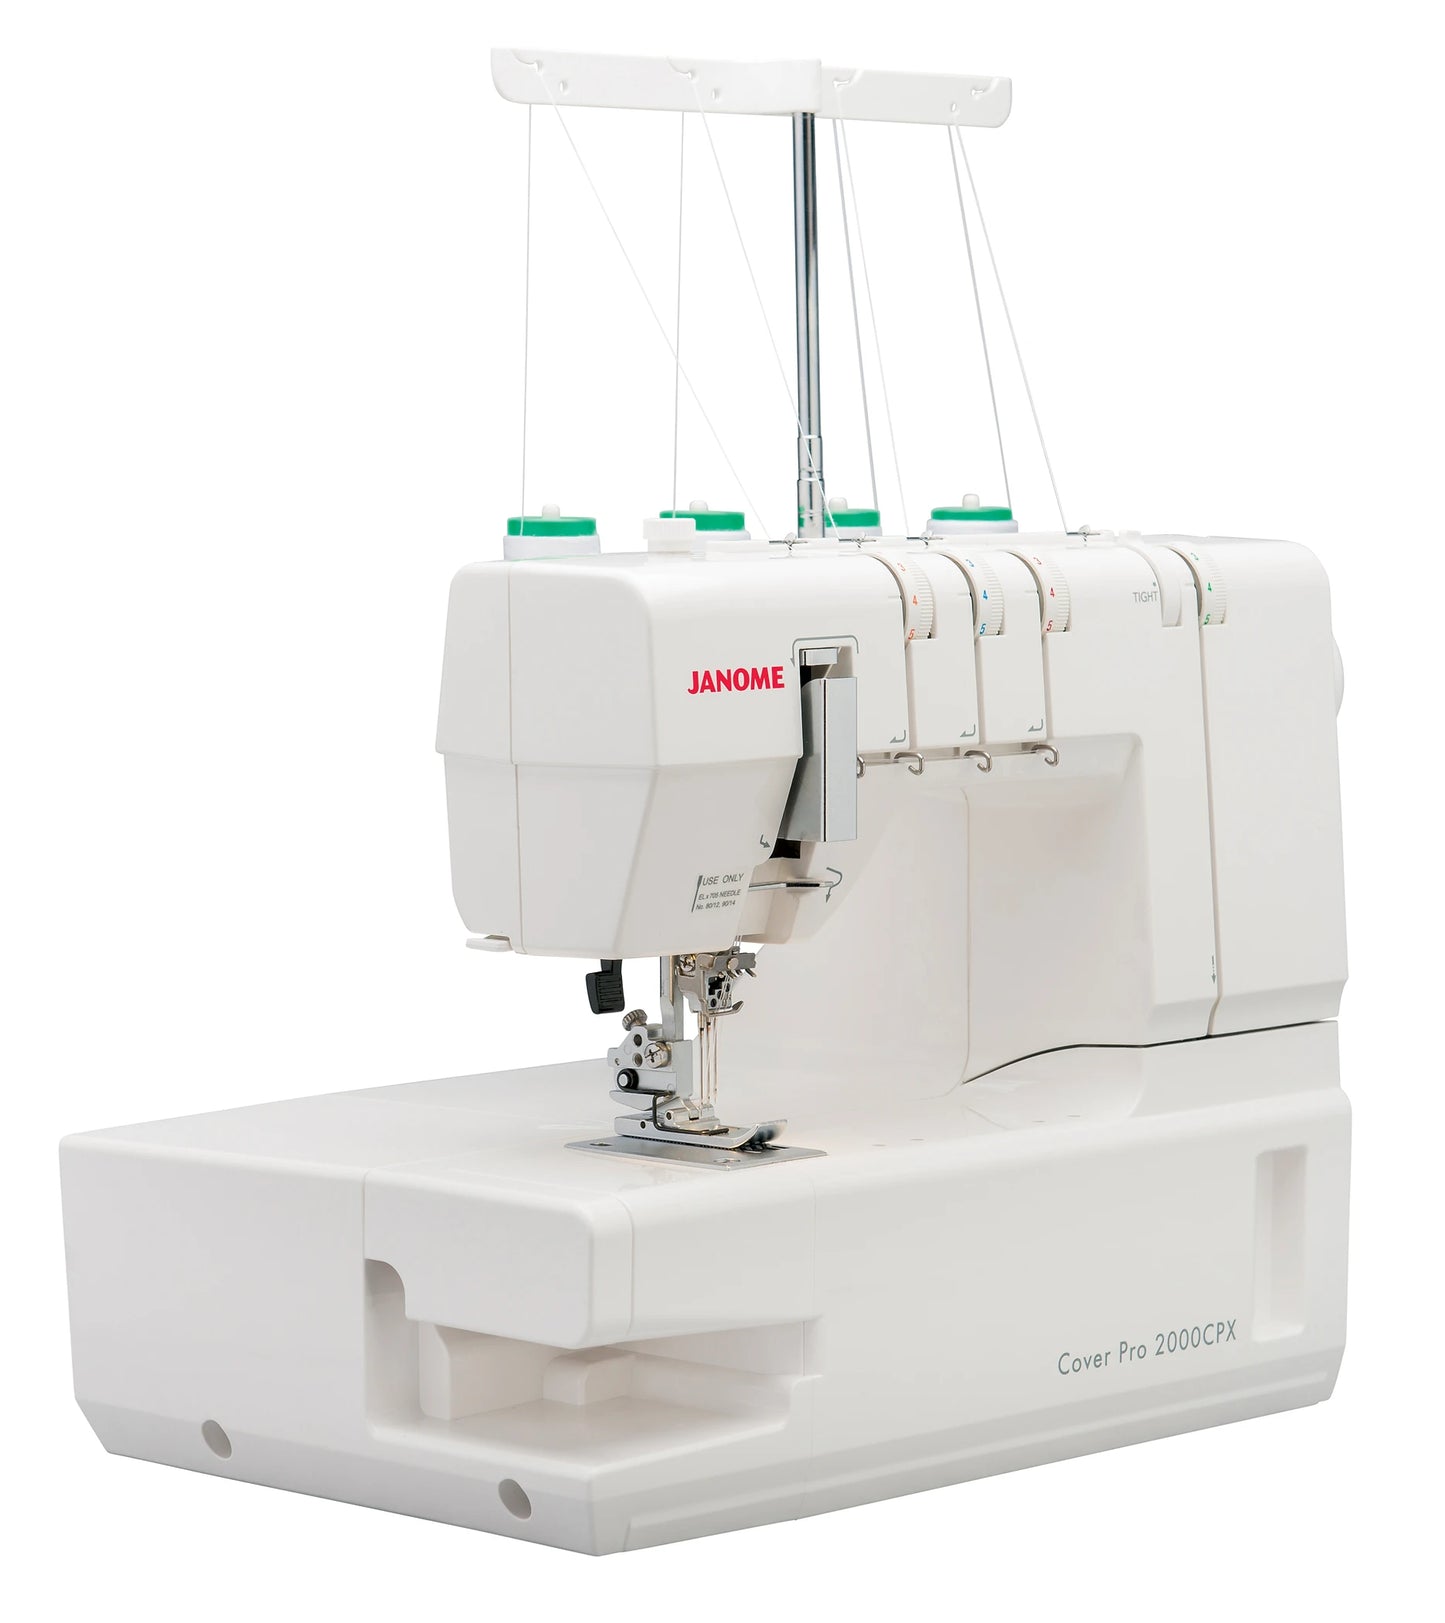 Janome CoverPro 2000CPX Sewing Machine *** SALE PRICE ***